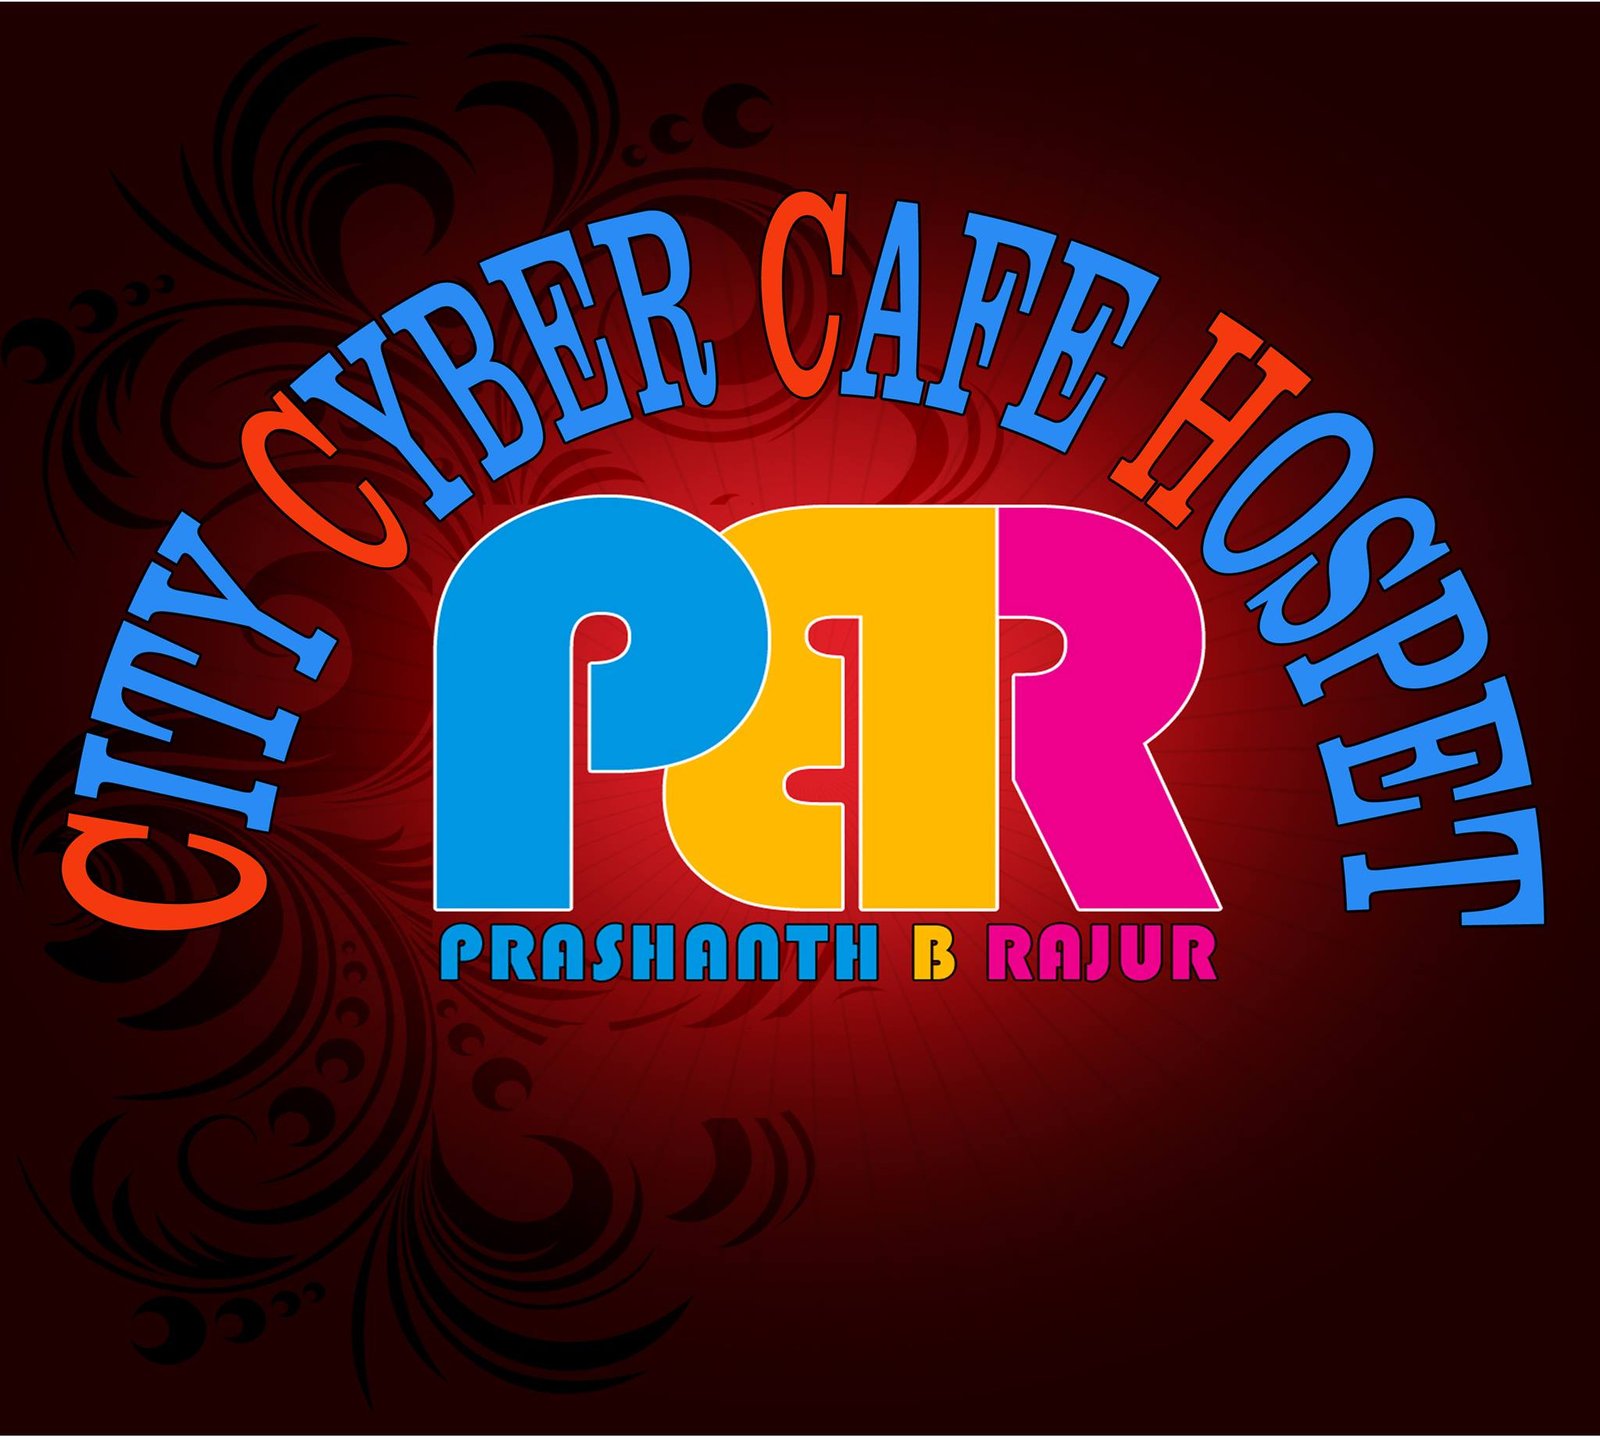 Giga Cyber Café logo, Vector Logo of Giga Cyber Café brand free download  (eps, ai, png, cdr) formats